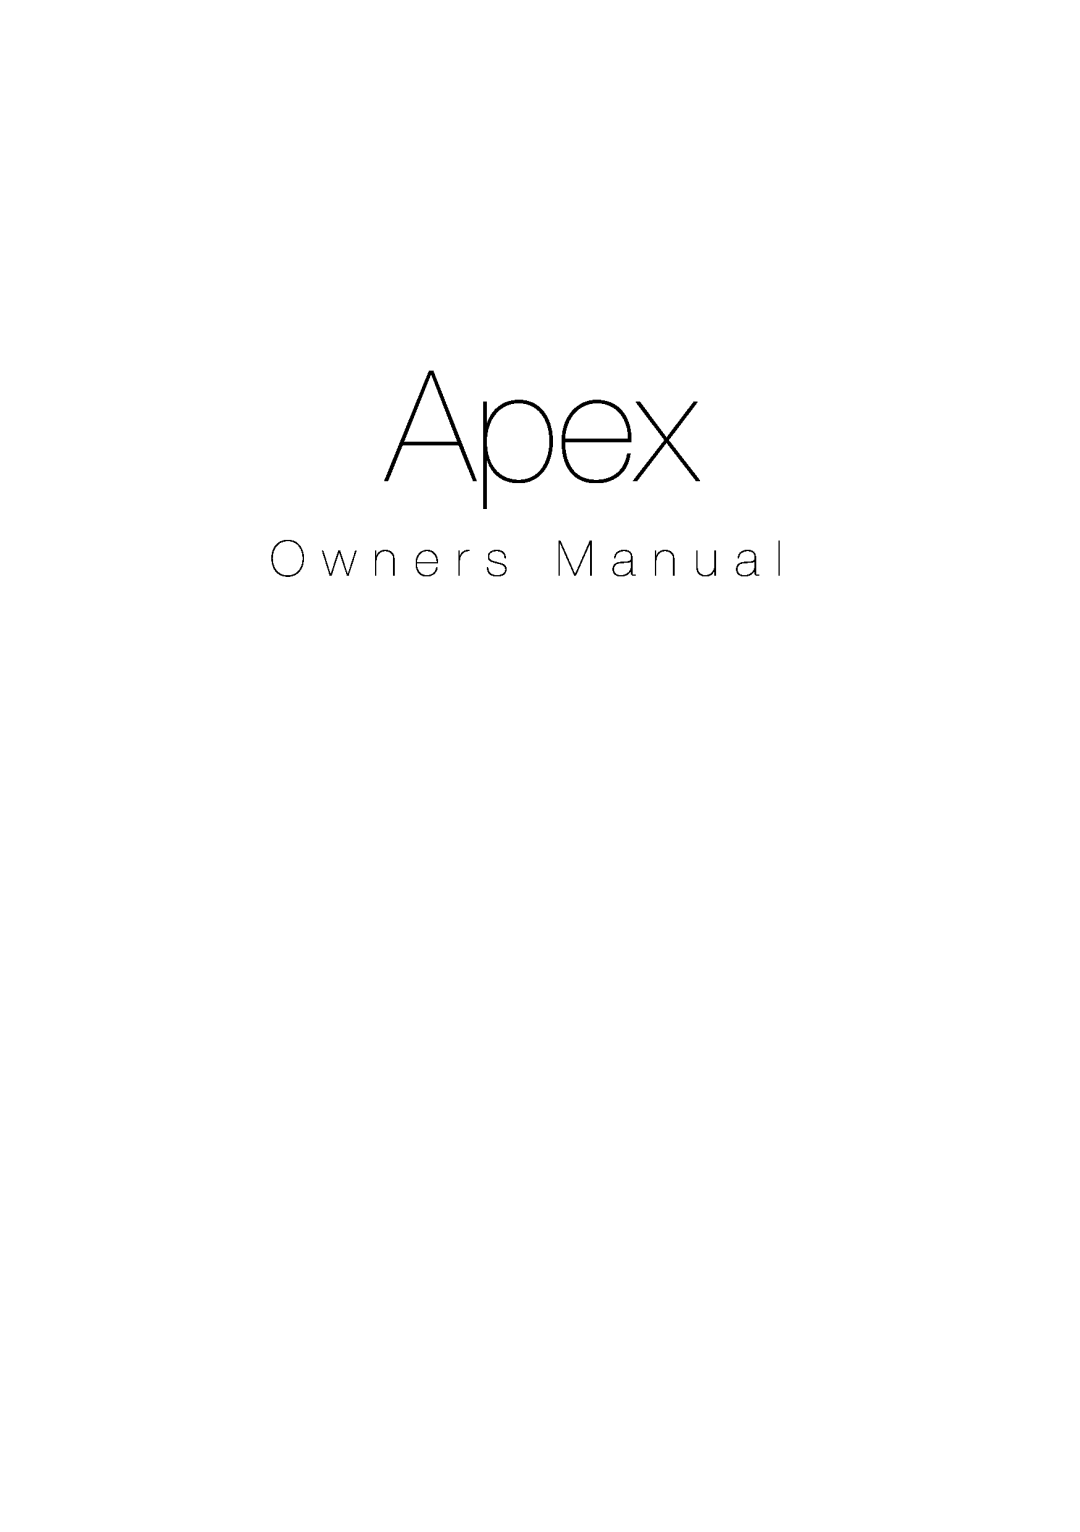 Apex Digital 10 owner manual Apex, O w n e r s M a n u a l 